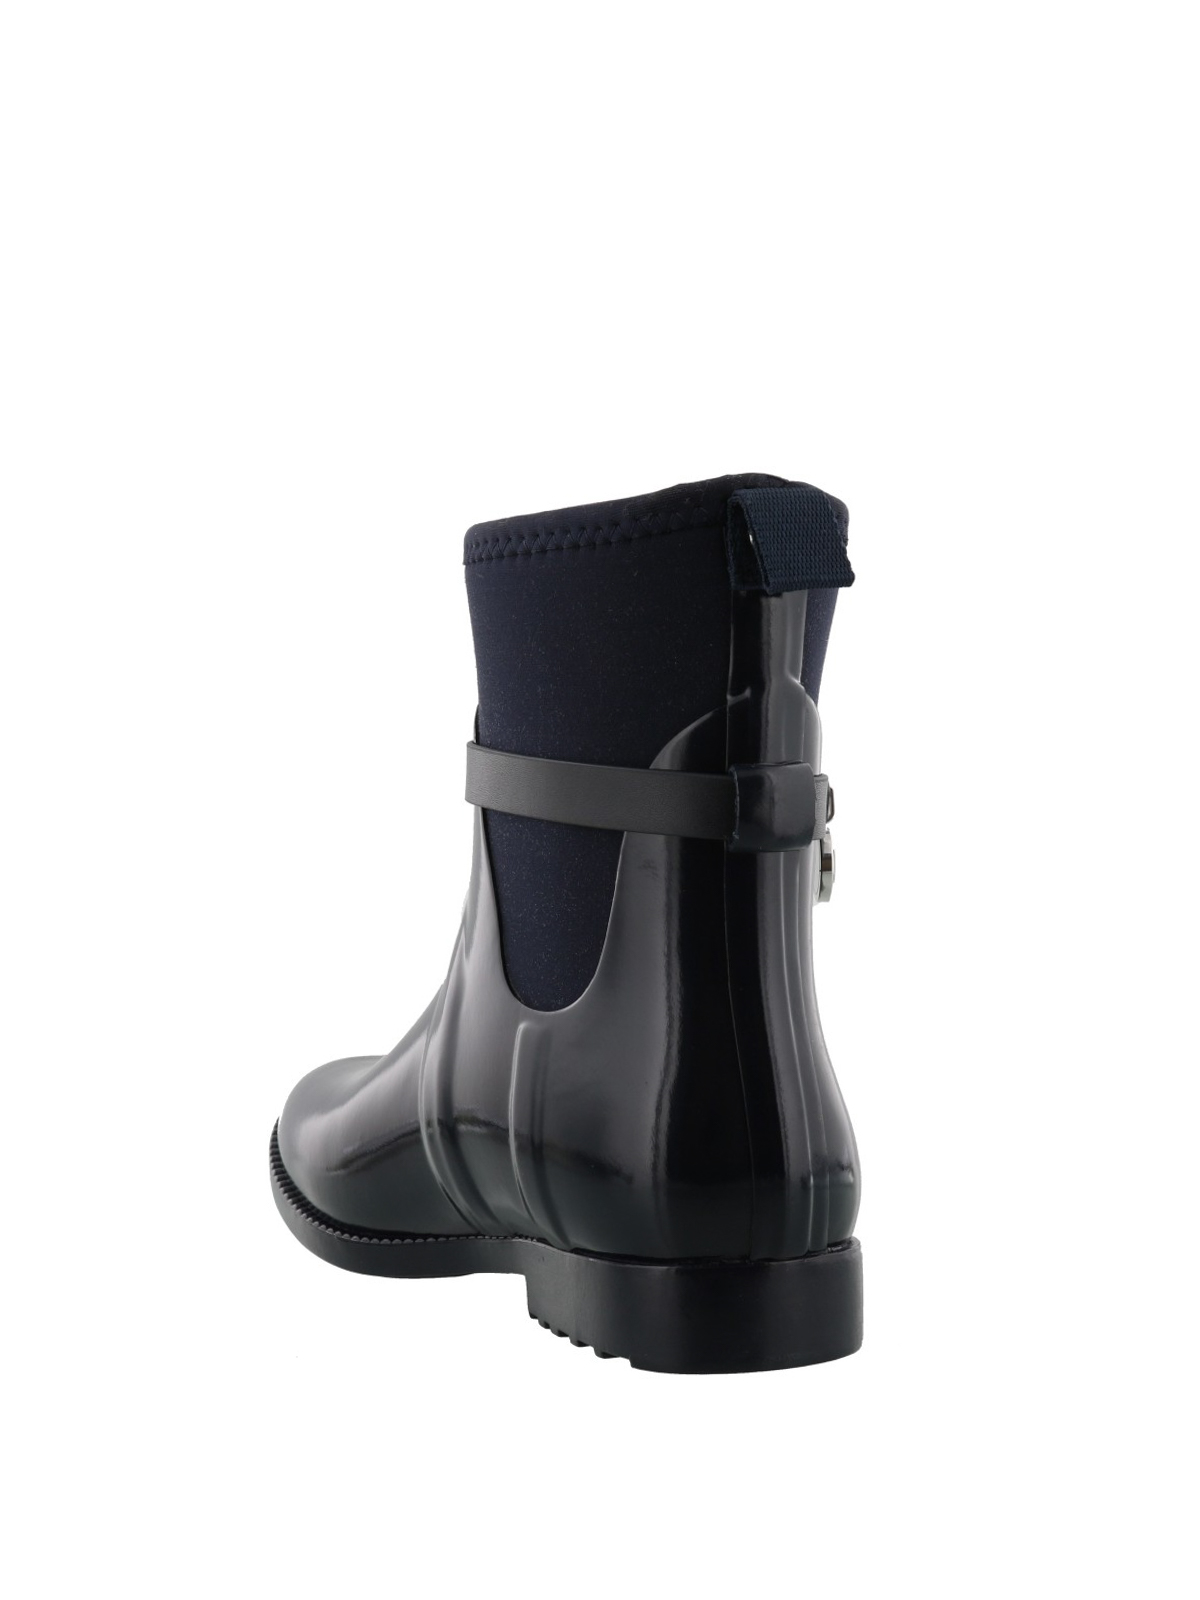 neoprene rain booties - ankle boots 